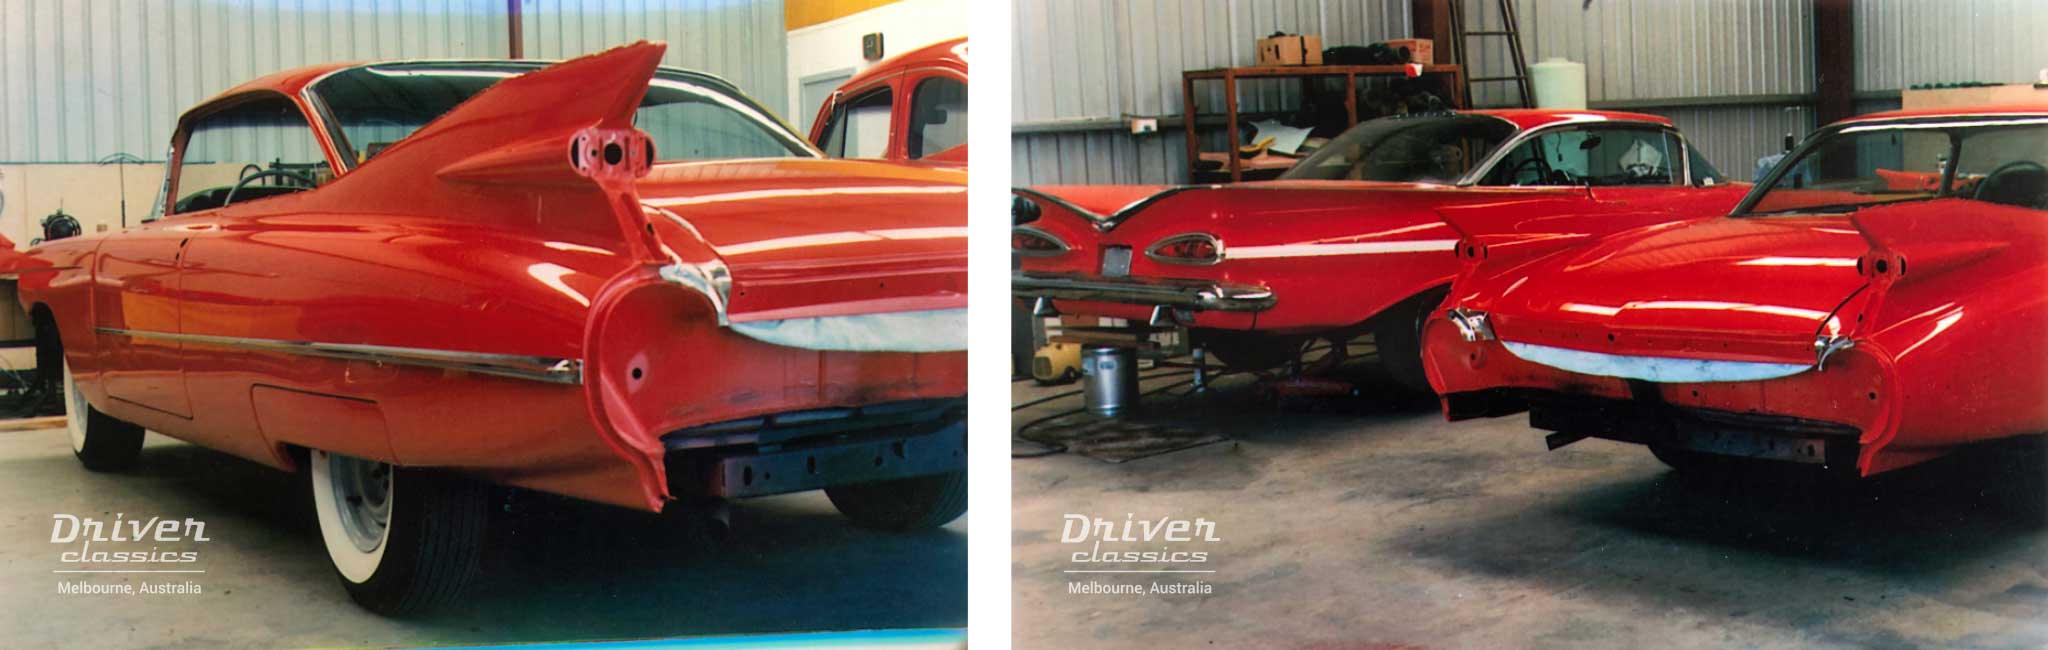 1959 Cadillac Coupe de Ville under restoration. 1959 Cheverolet Impala under resotration.